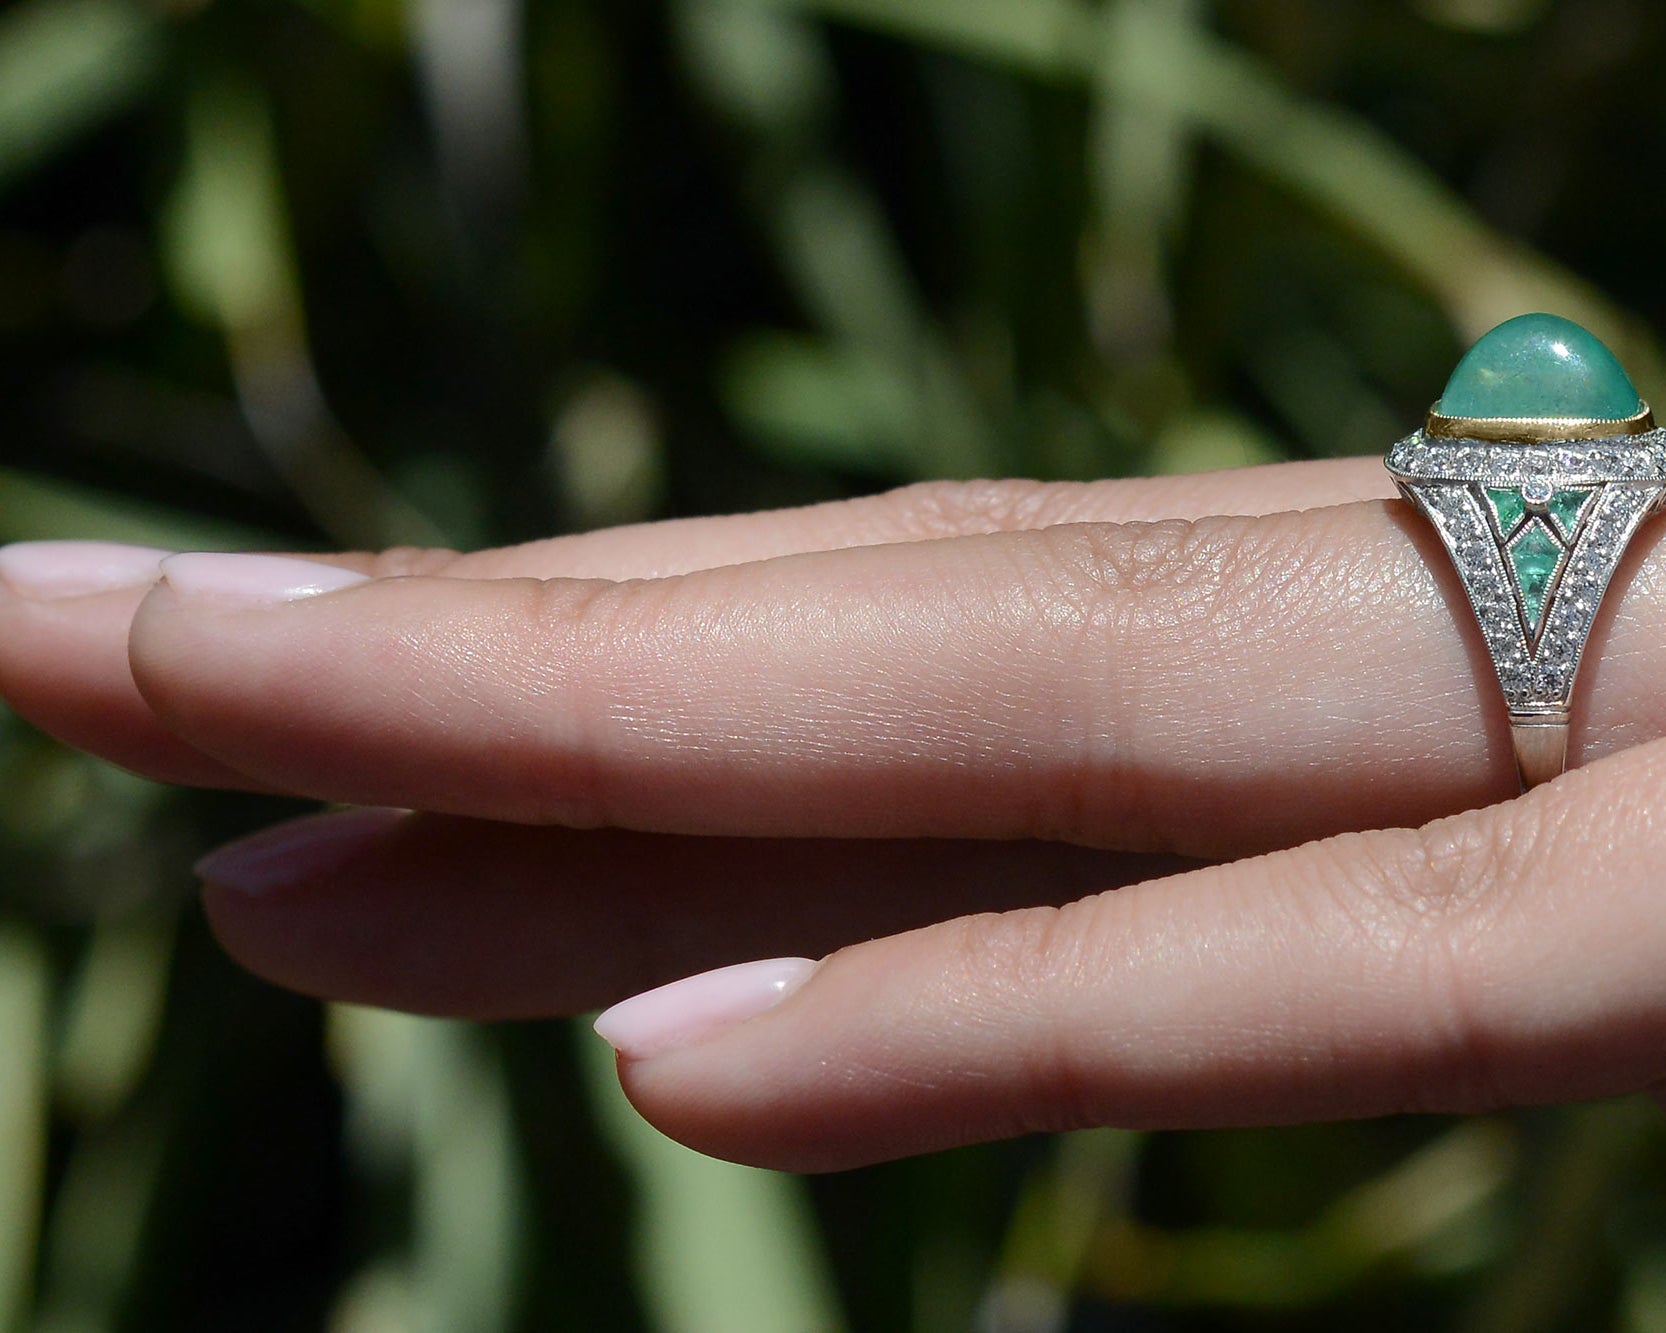 4 Carat Sugar Loaf Colombian Emerald Art Deco Cocktail Ring